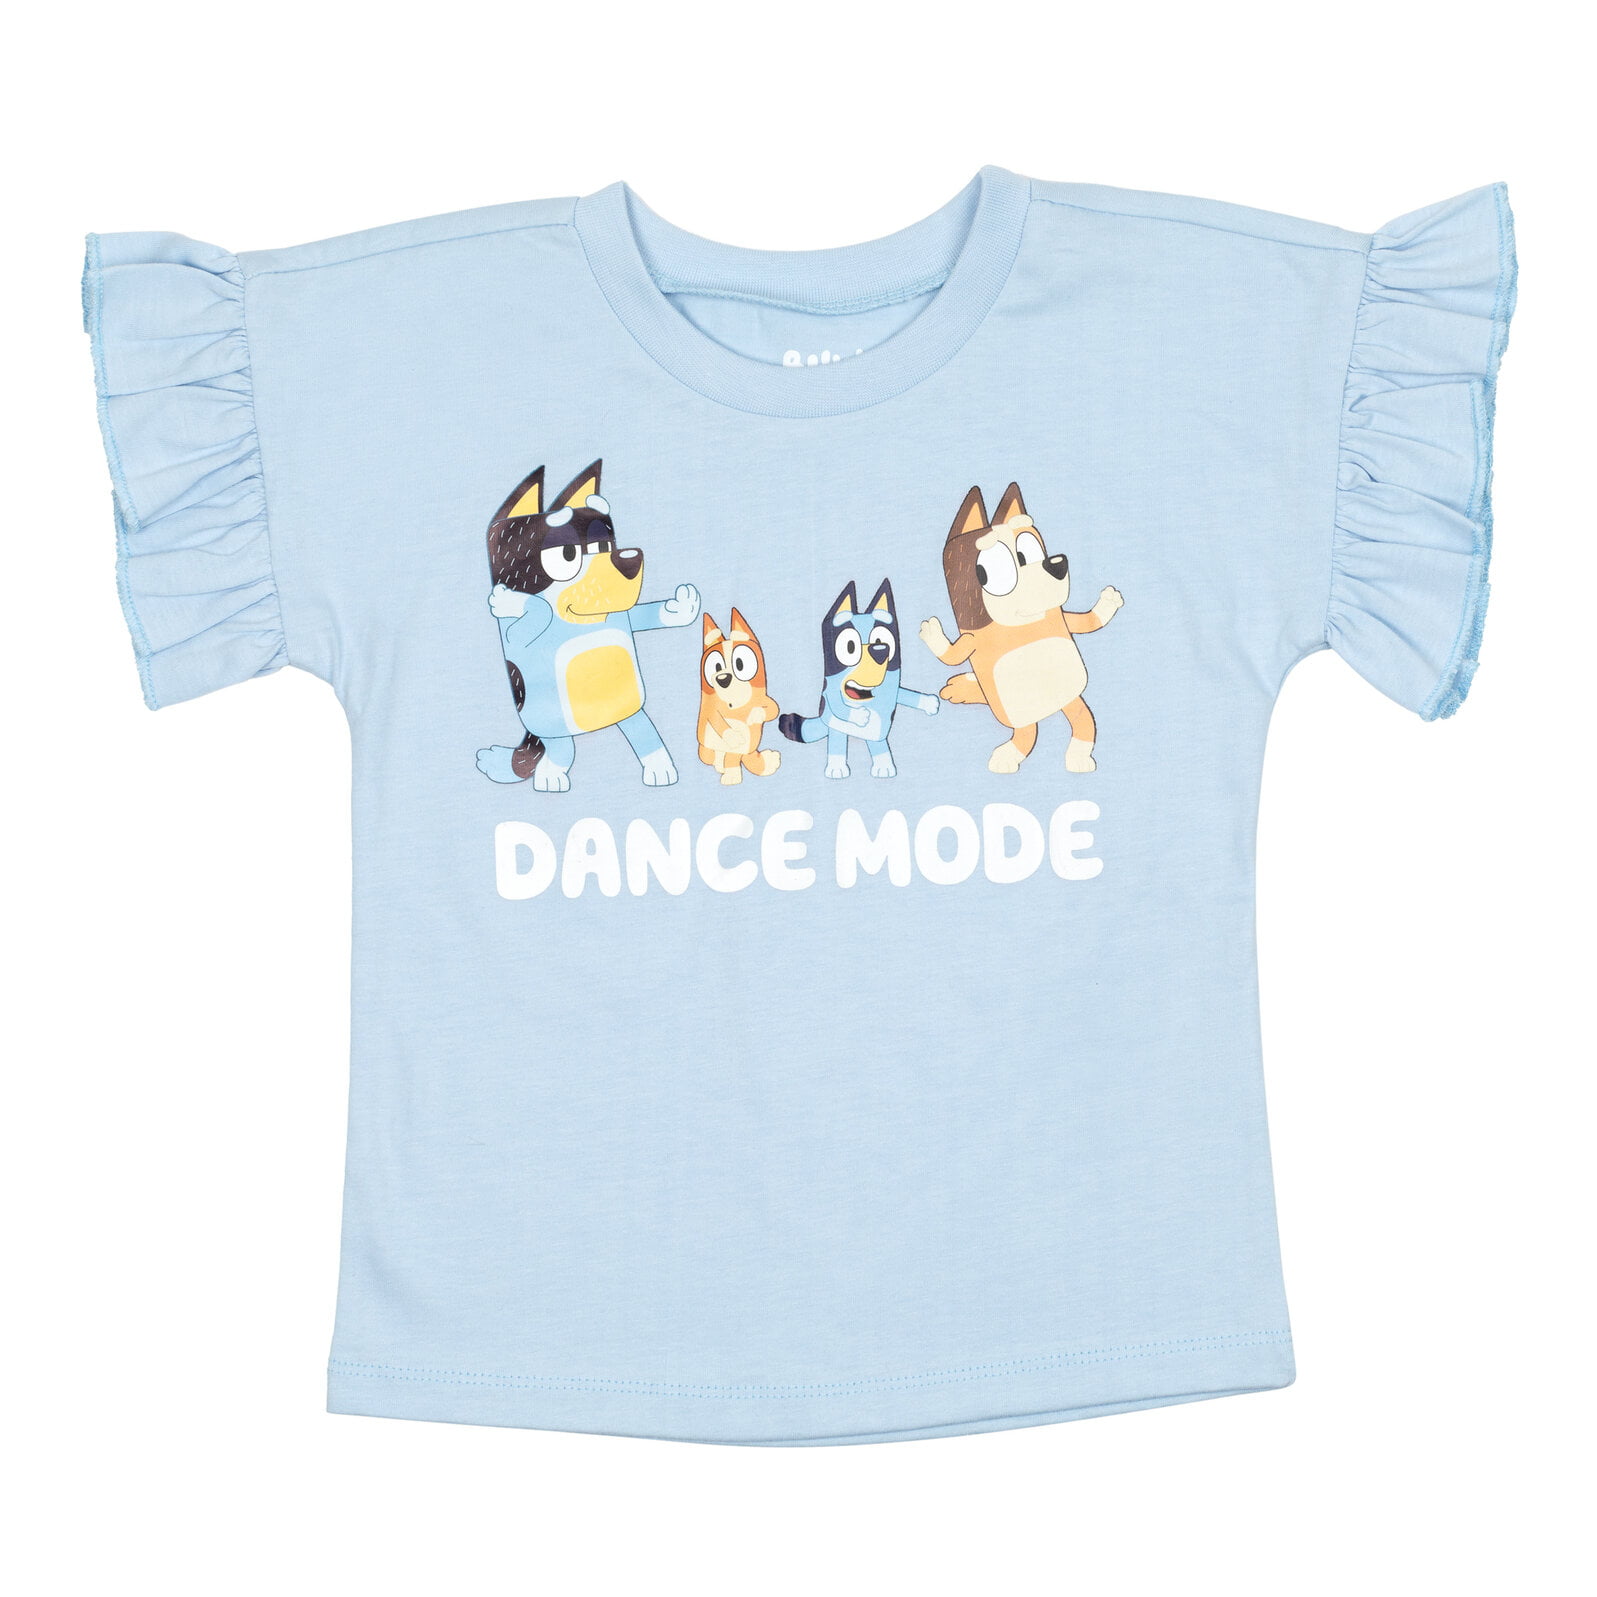 Bluey Bingo Chloe Little Girls 3 Pack T-Shirts Toddler to Big Kid